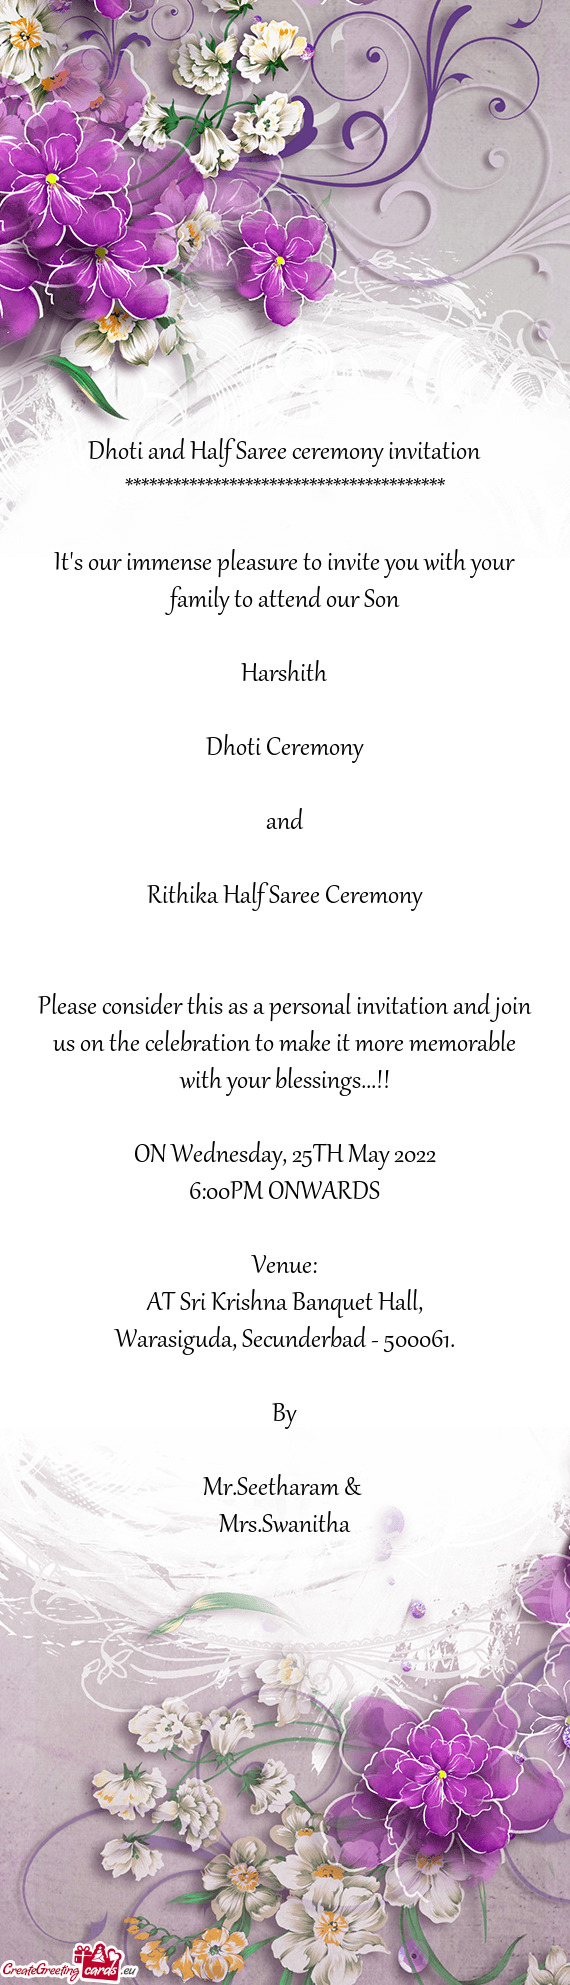 Rithika Half Saree Ceremony